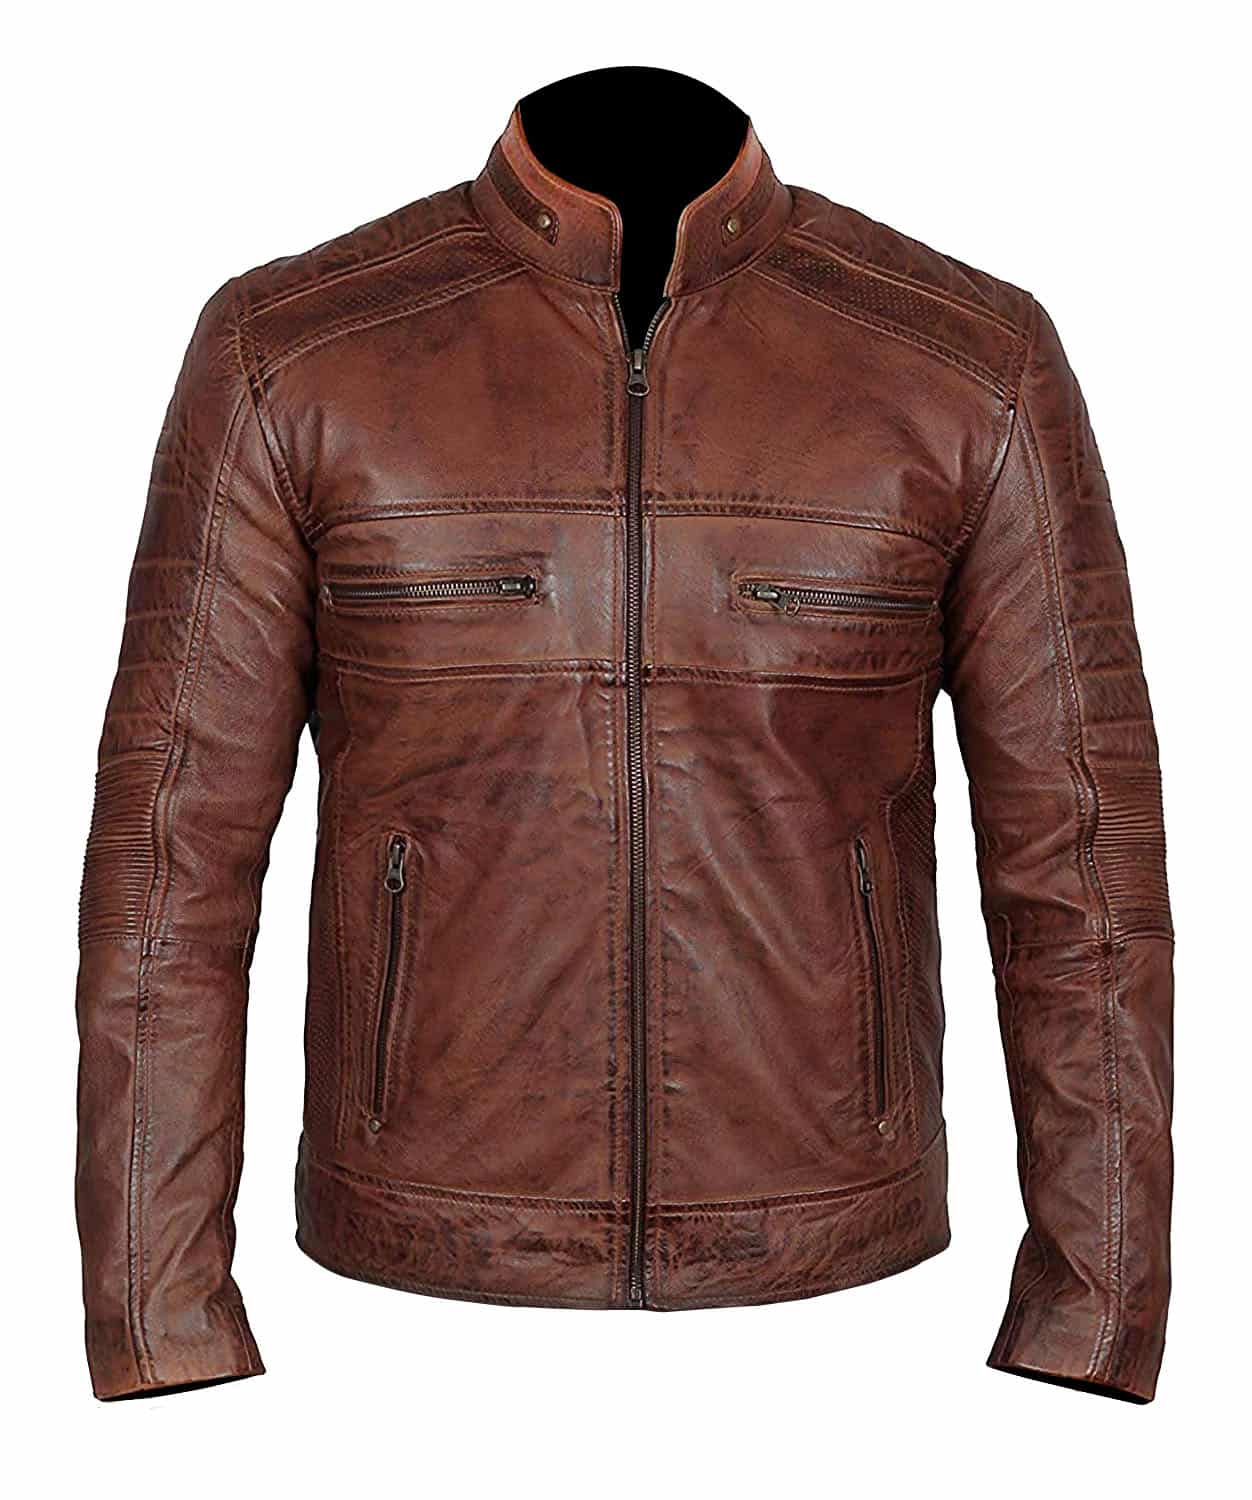 Bikers Gear Online Usa Buy 99 Leather Jackets For Men